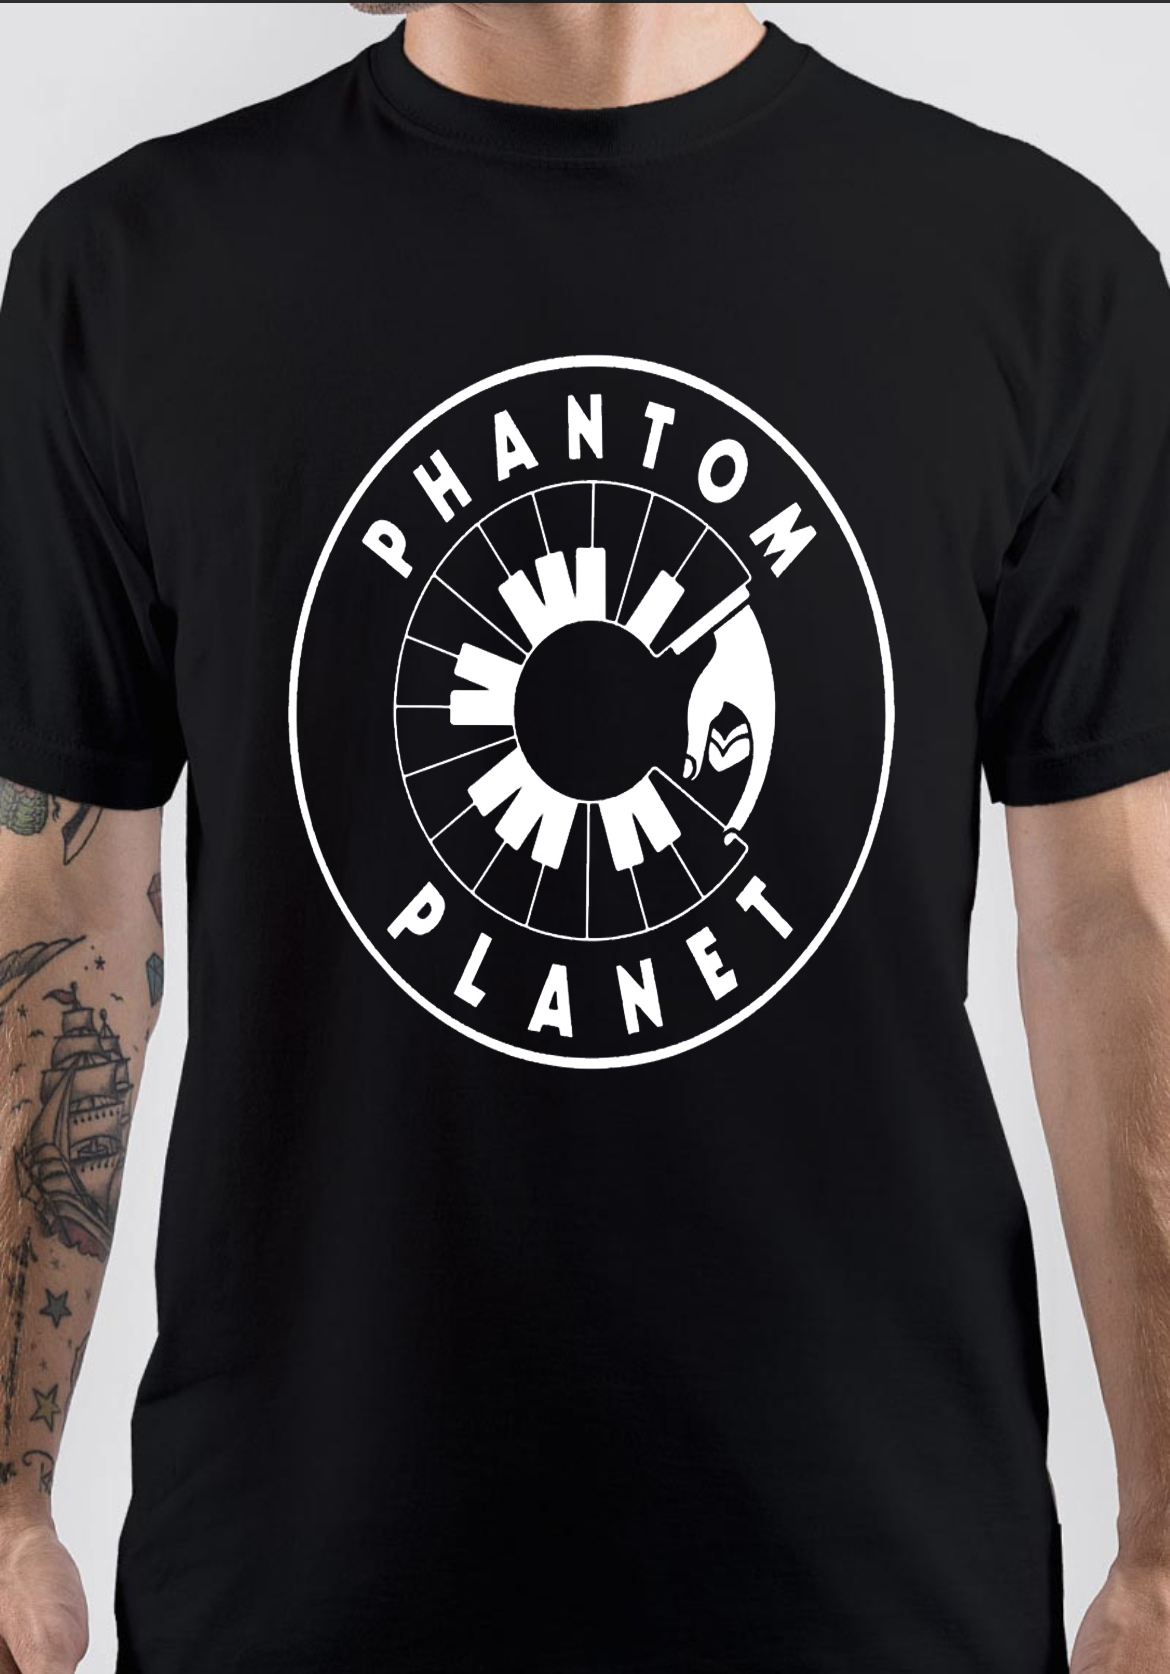 Phantom Plane T-Shirt And Merchandise